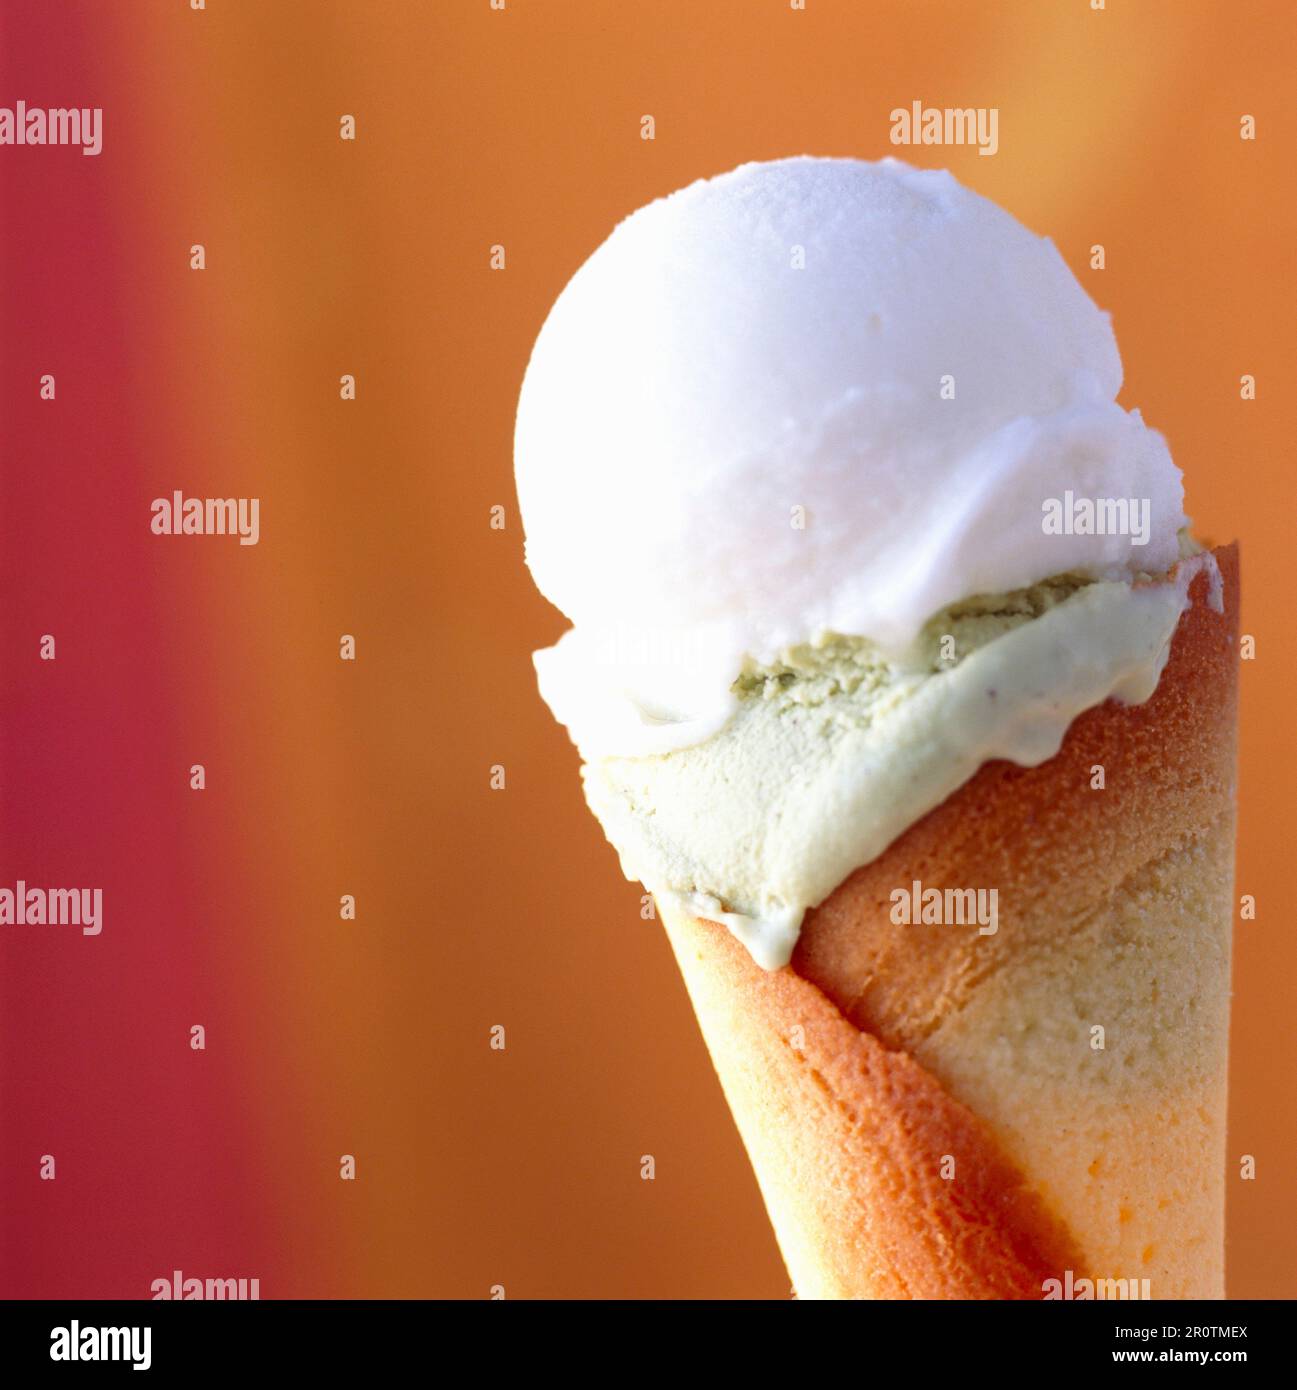 Cone with scoops of ice cream Stock Photo